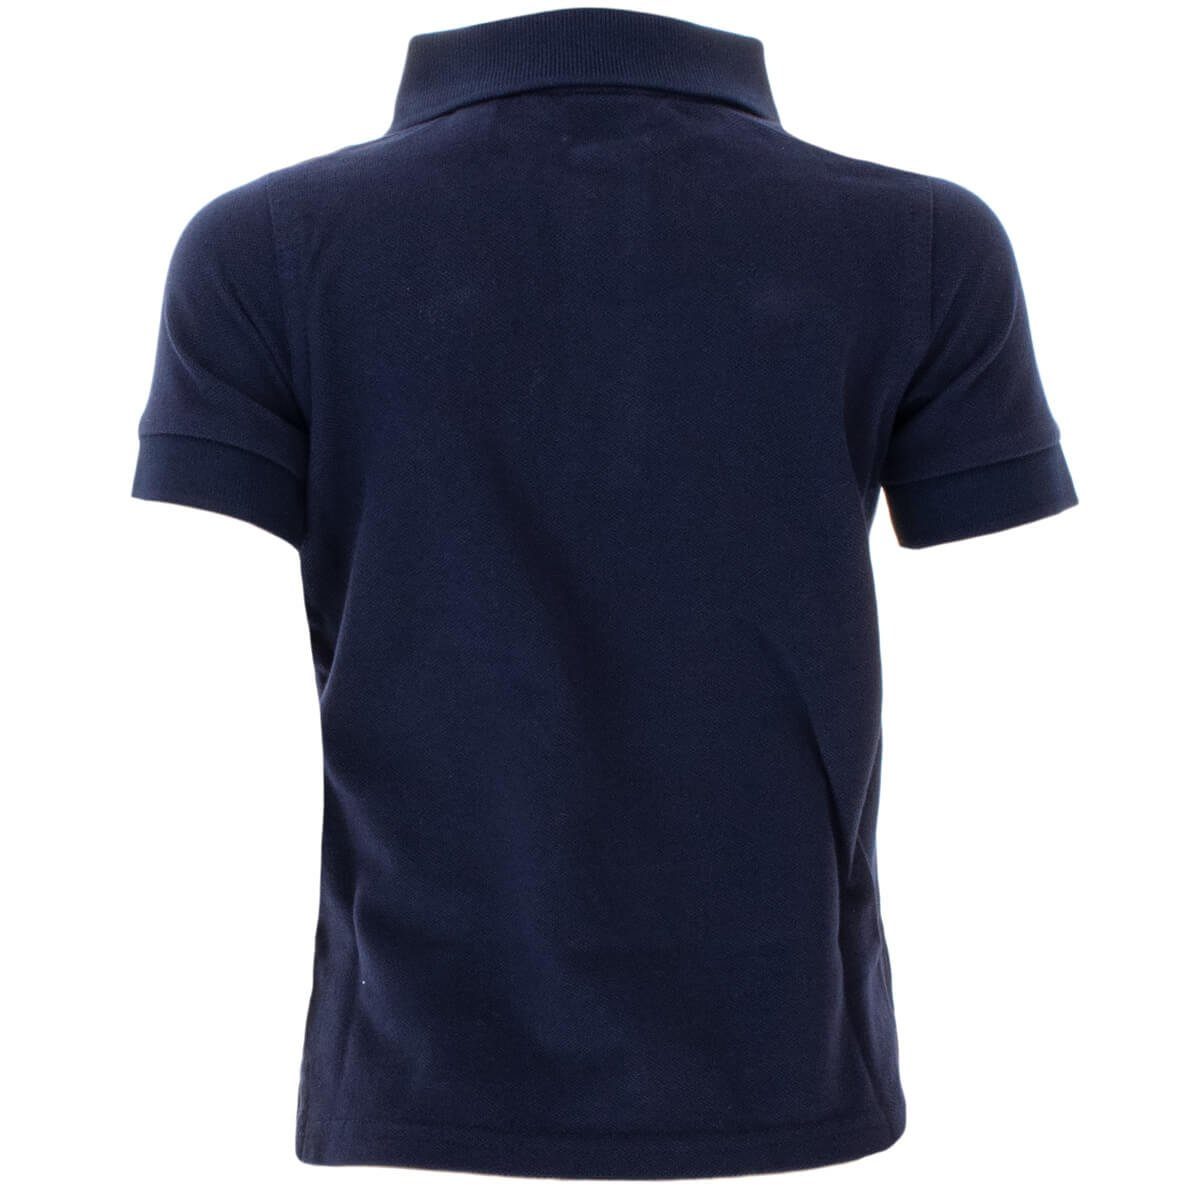 Kinder Blau(433) Gant Poloshirt Unisex Original Baumwolle Pique 802201 Poloshirt